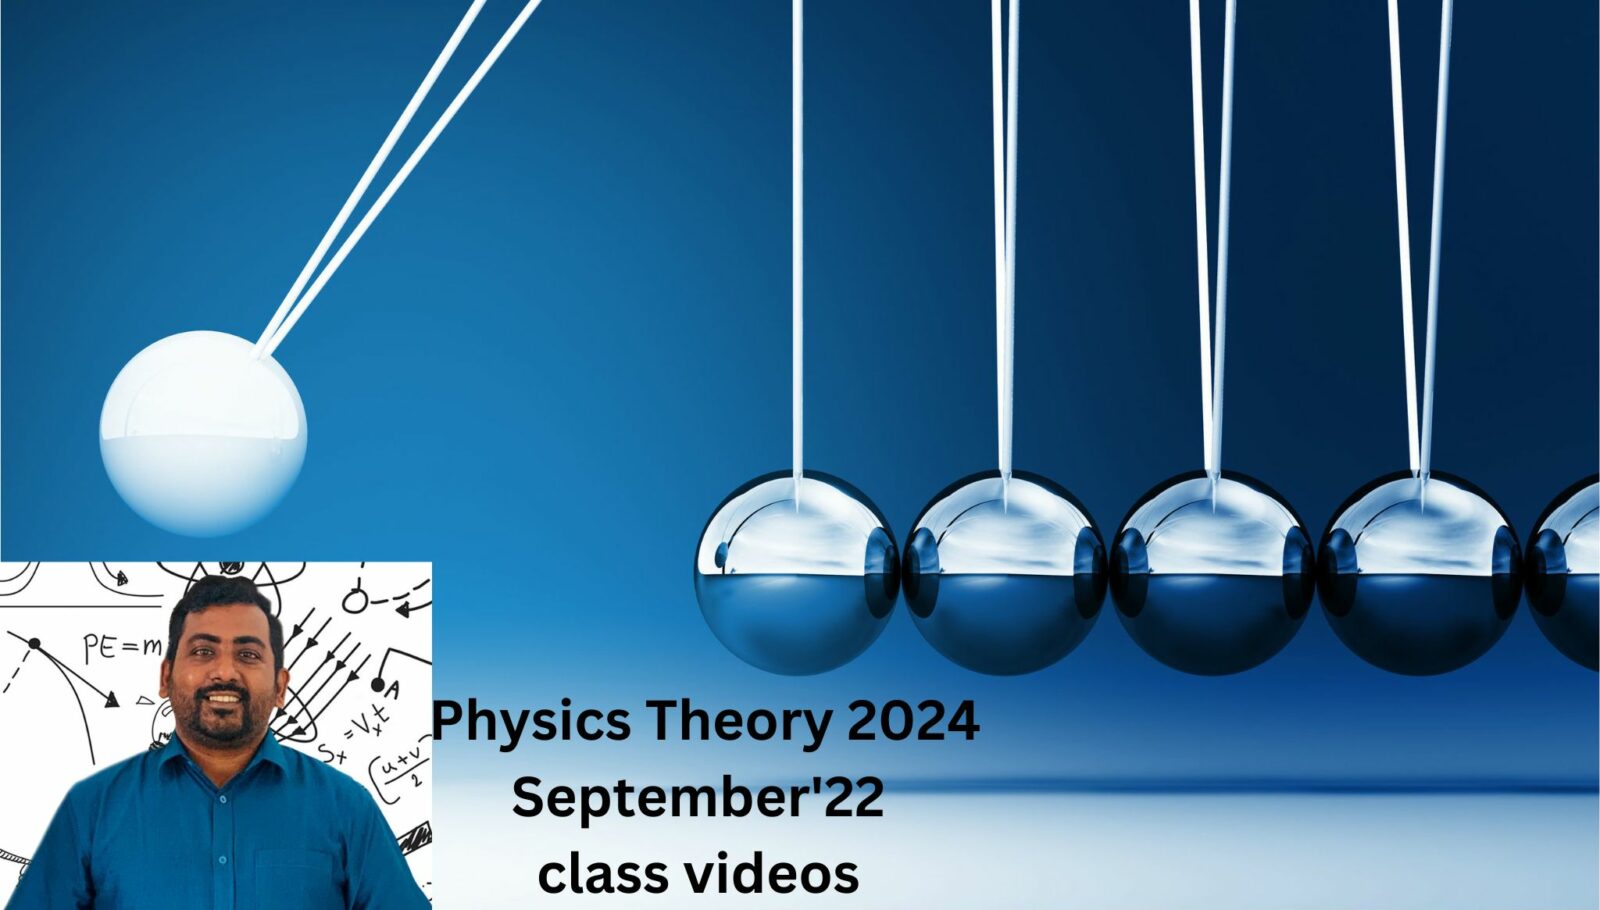 Physics Theory 2024 3 1600x910 